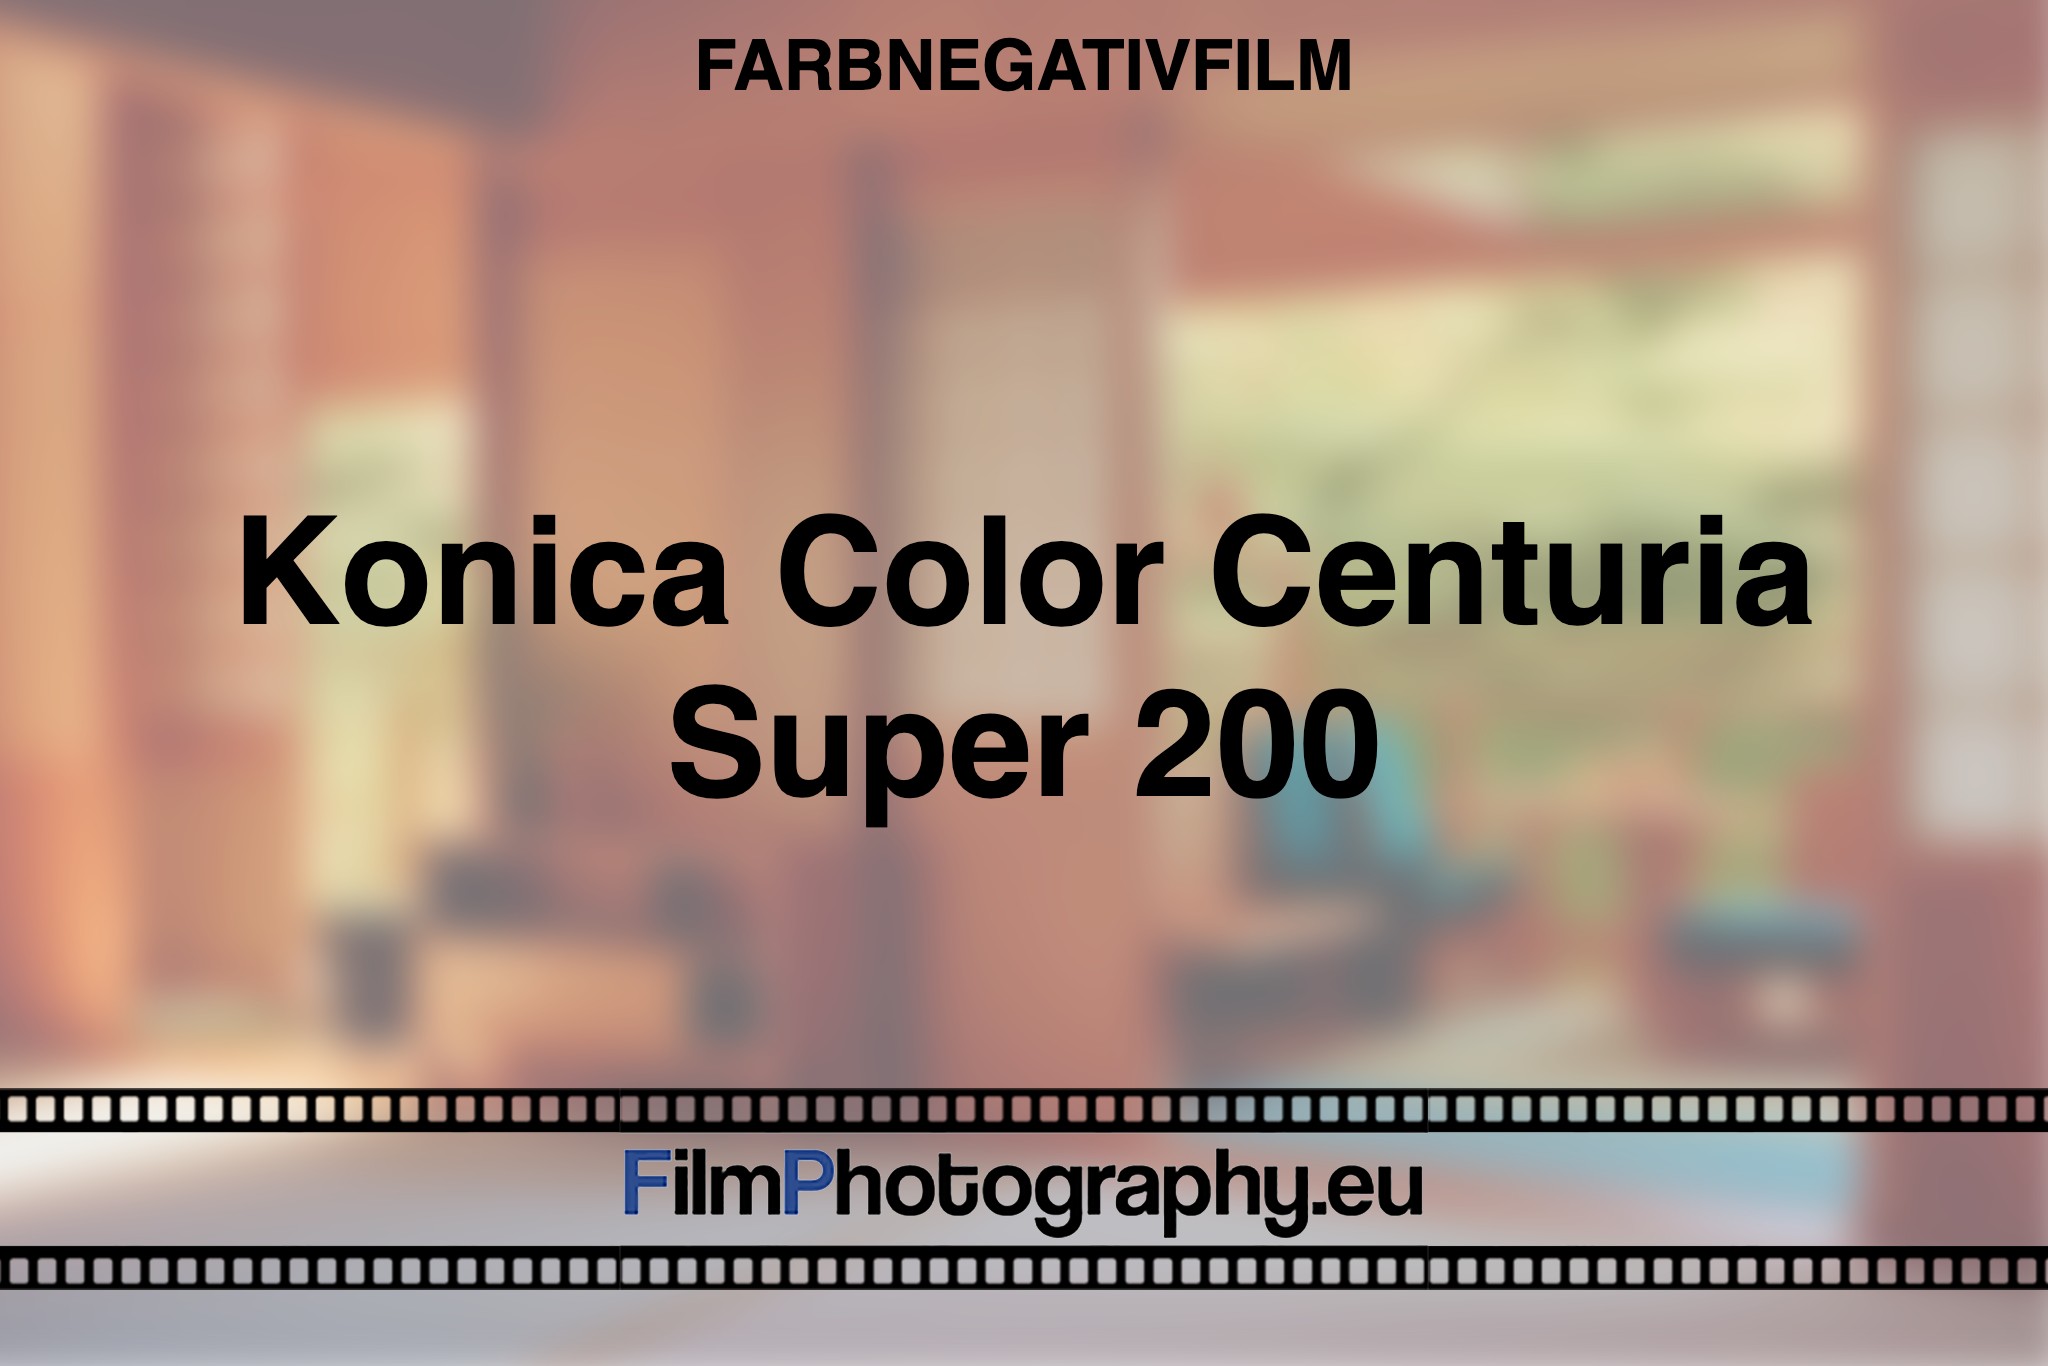 konica-color-centuria-super-200-farbnegativfilm-bnv